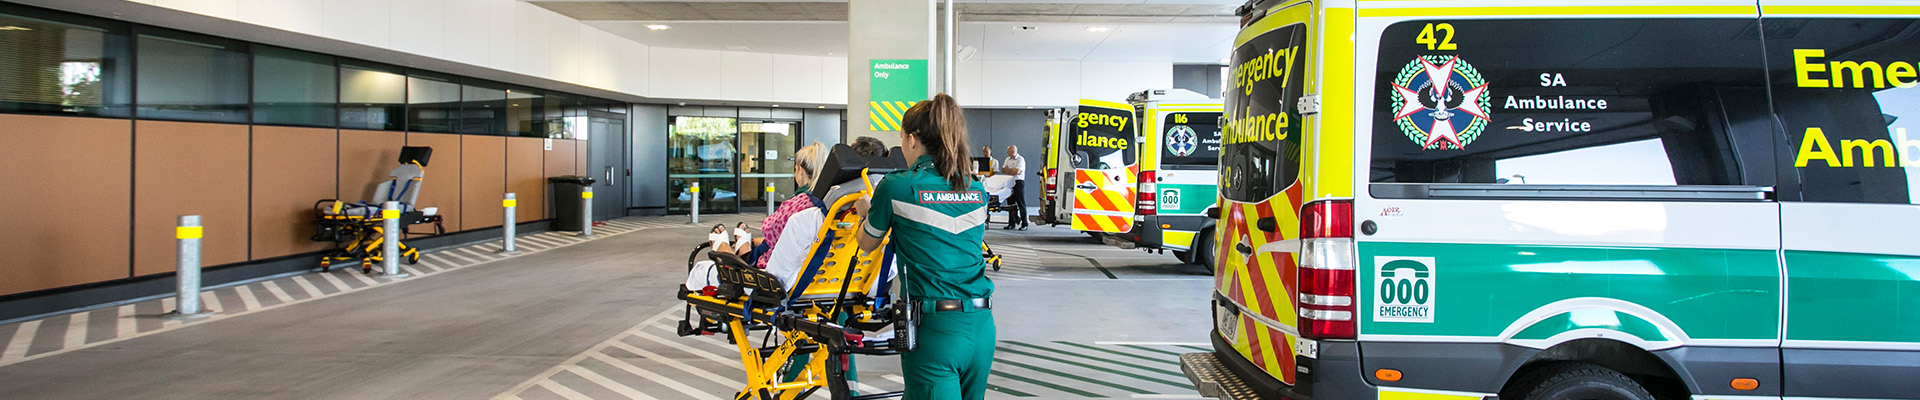 Ambulance arriving at RAH in Adelaide, South Australia